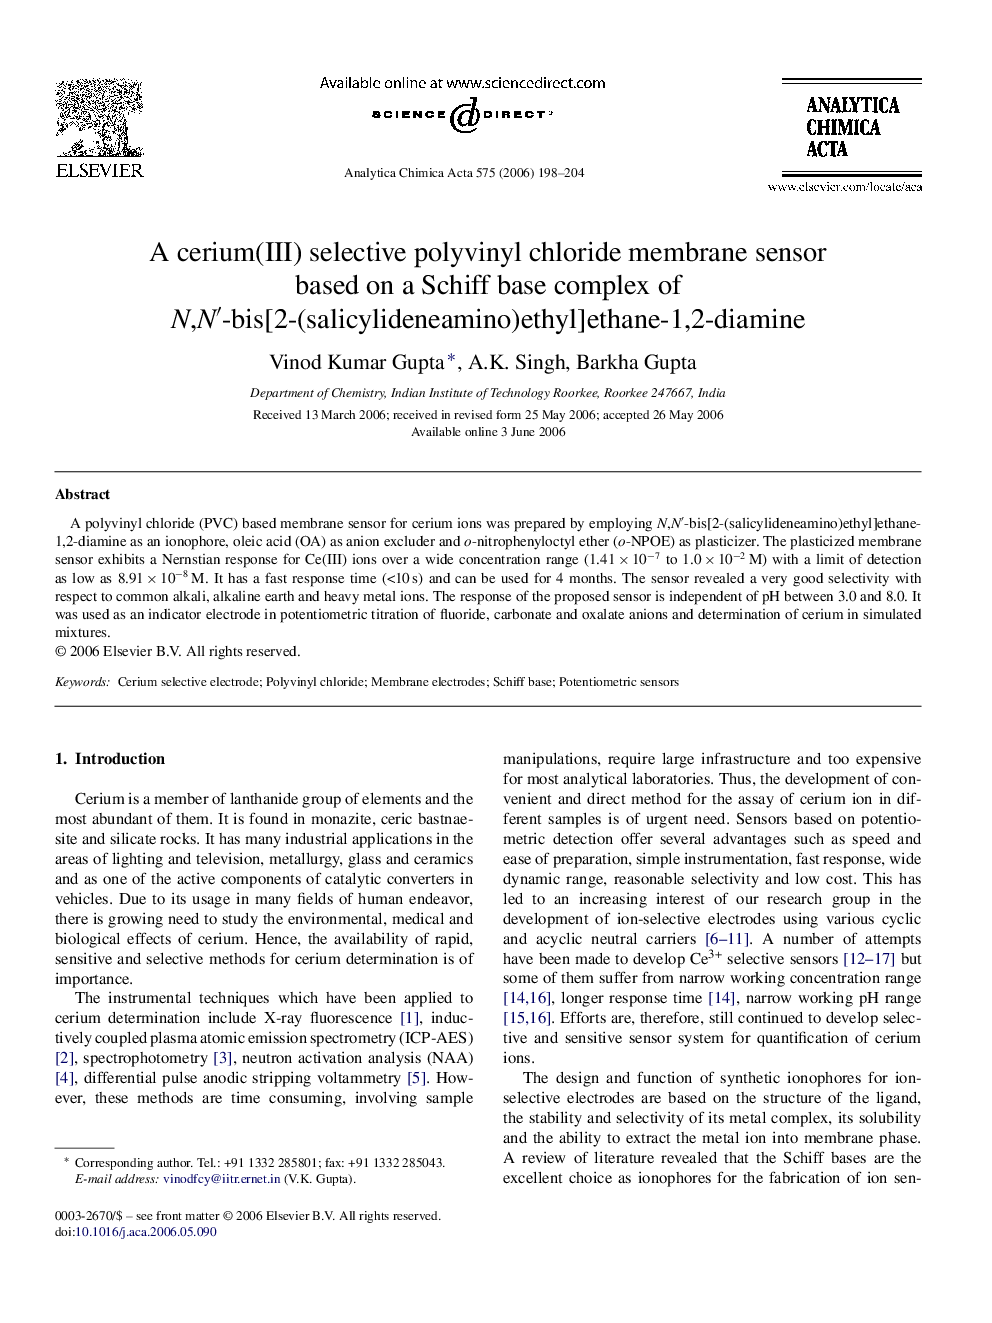 A cerium(III) selective polyvinyl chloride membrane sensor based on a Schiff base complex of N,N′-bis[2-(salicylideneamino)ethyl]ethane-1,2-diamine